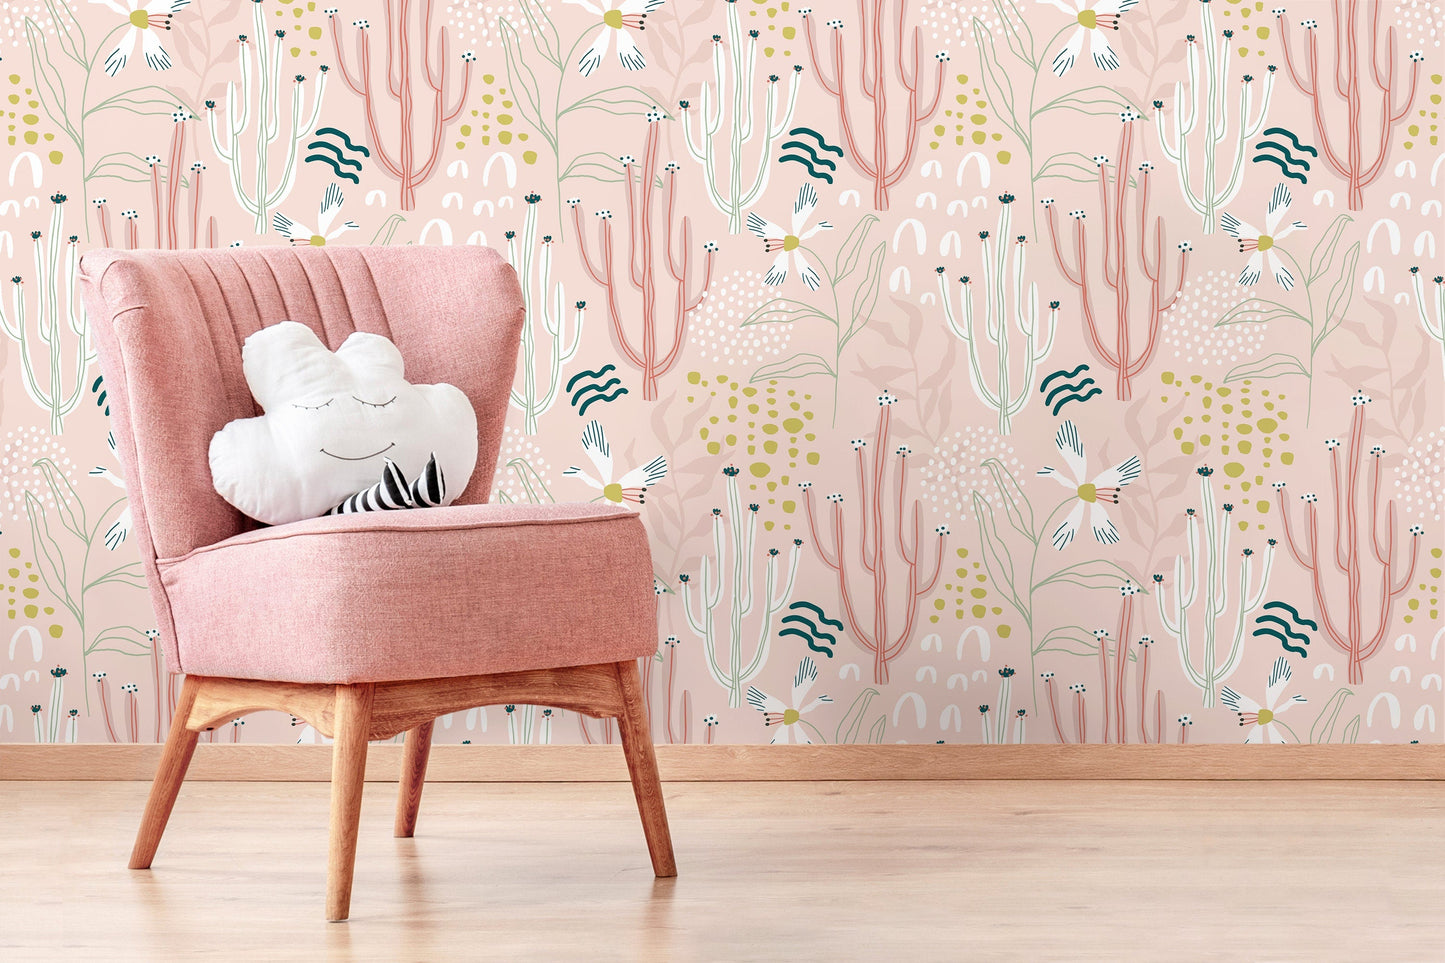 Cute Pink Floral Wallpaper / Peel and Stick Wallpaper Removable Wallpaper Home Decor Wall Art Wall Decor Room Decor - D313